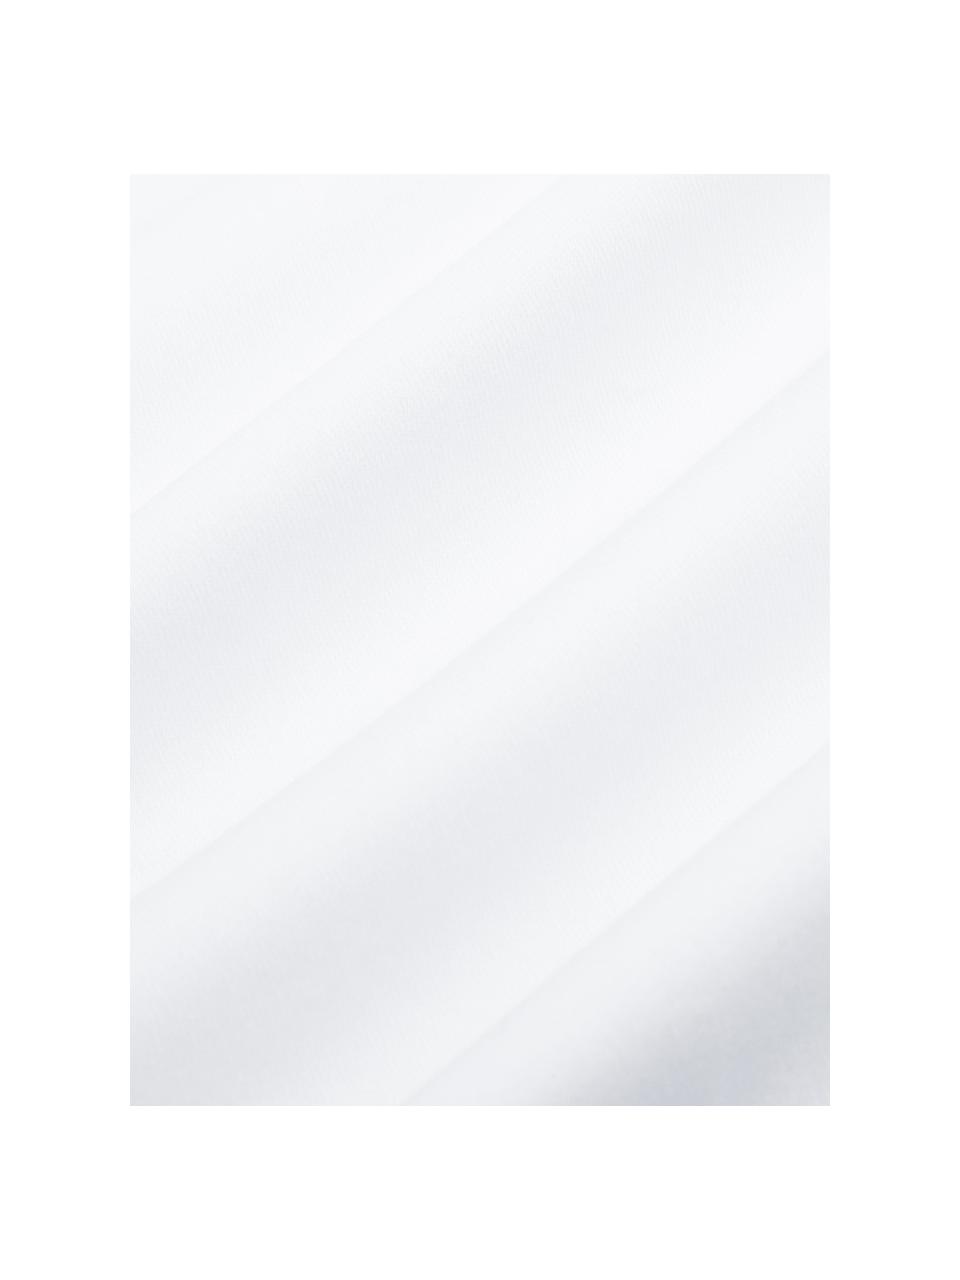 Sábana bajera de satén de algodón ecológico Premium, Blanco, Cama 180 cm (180 x 200 cm)